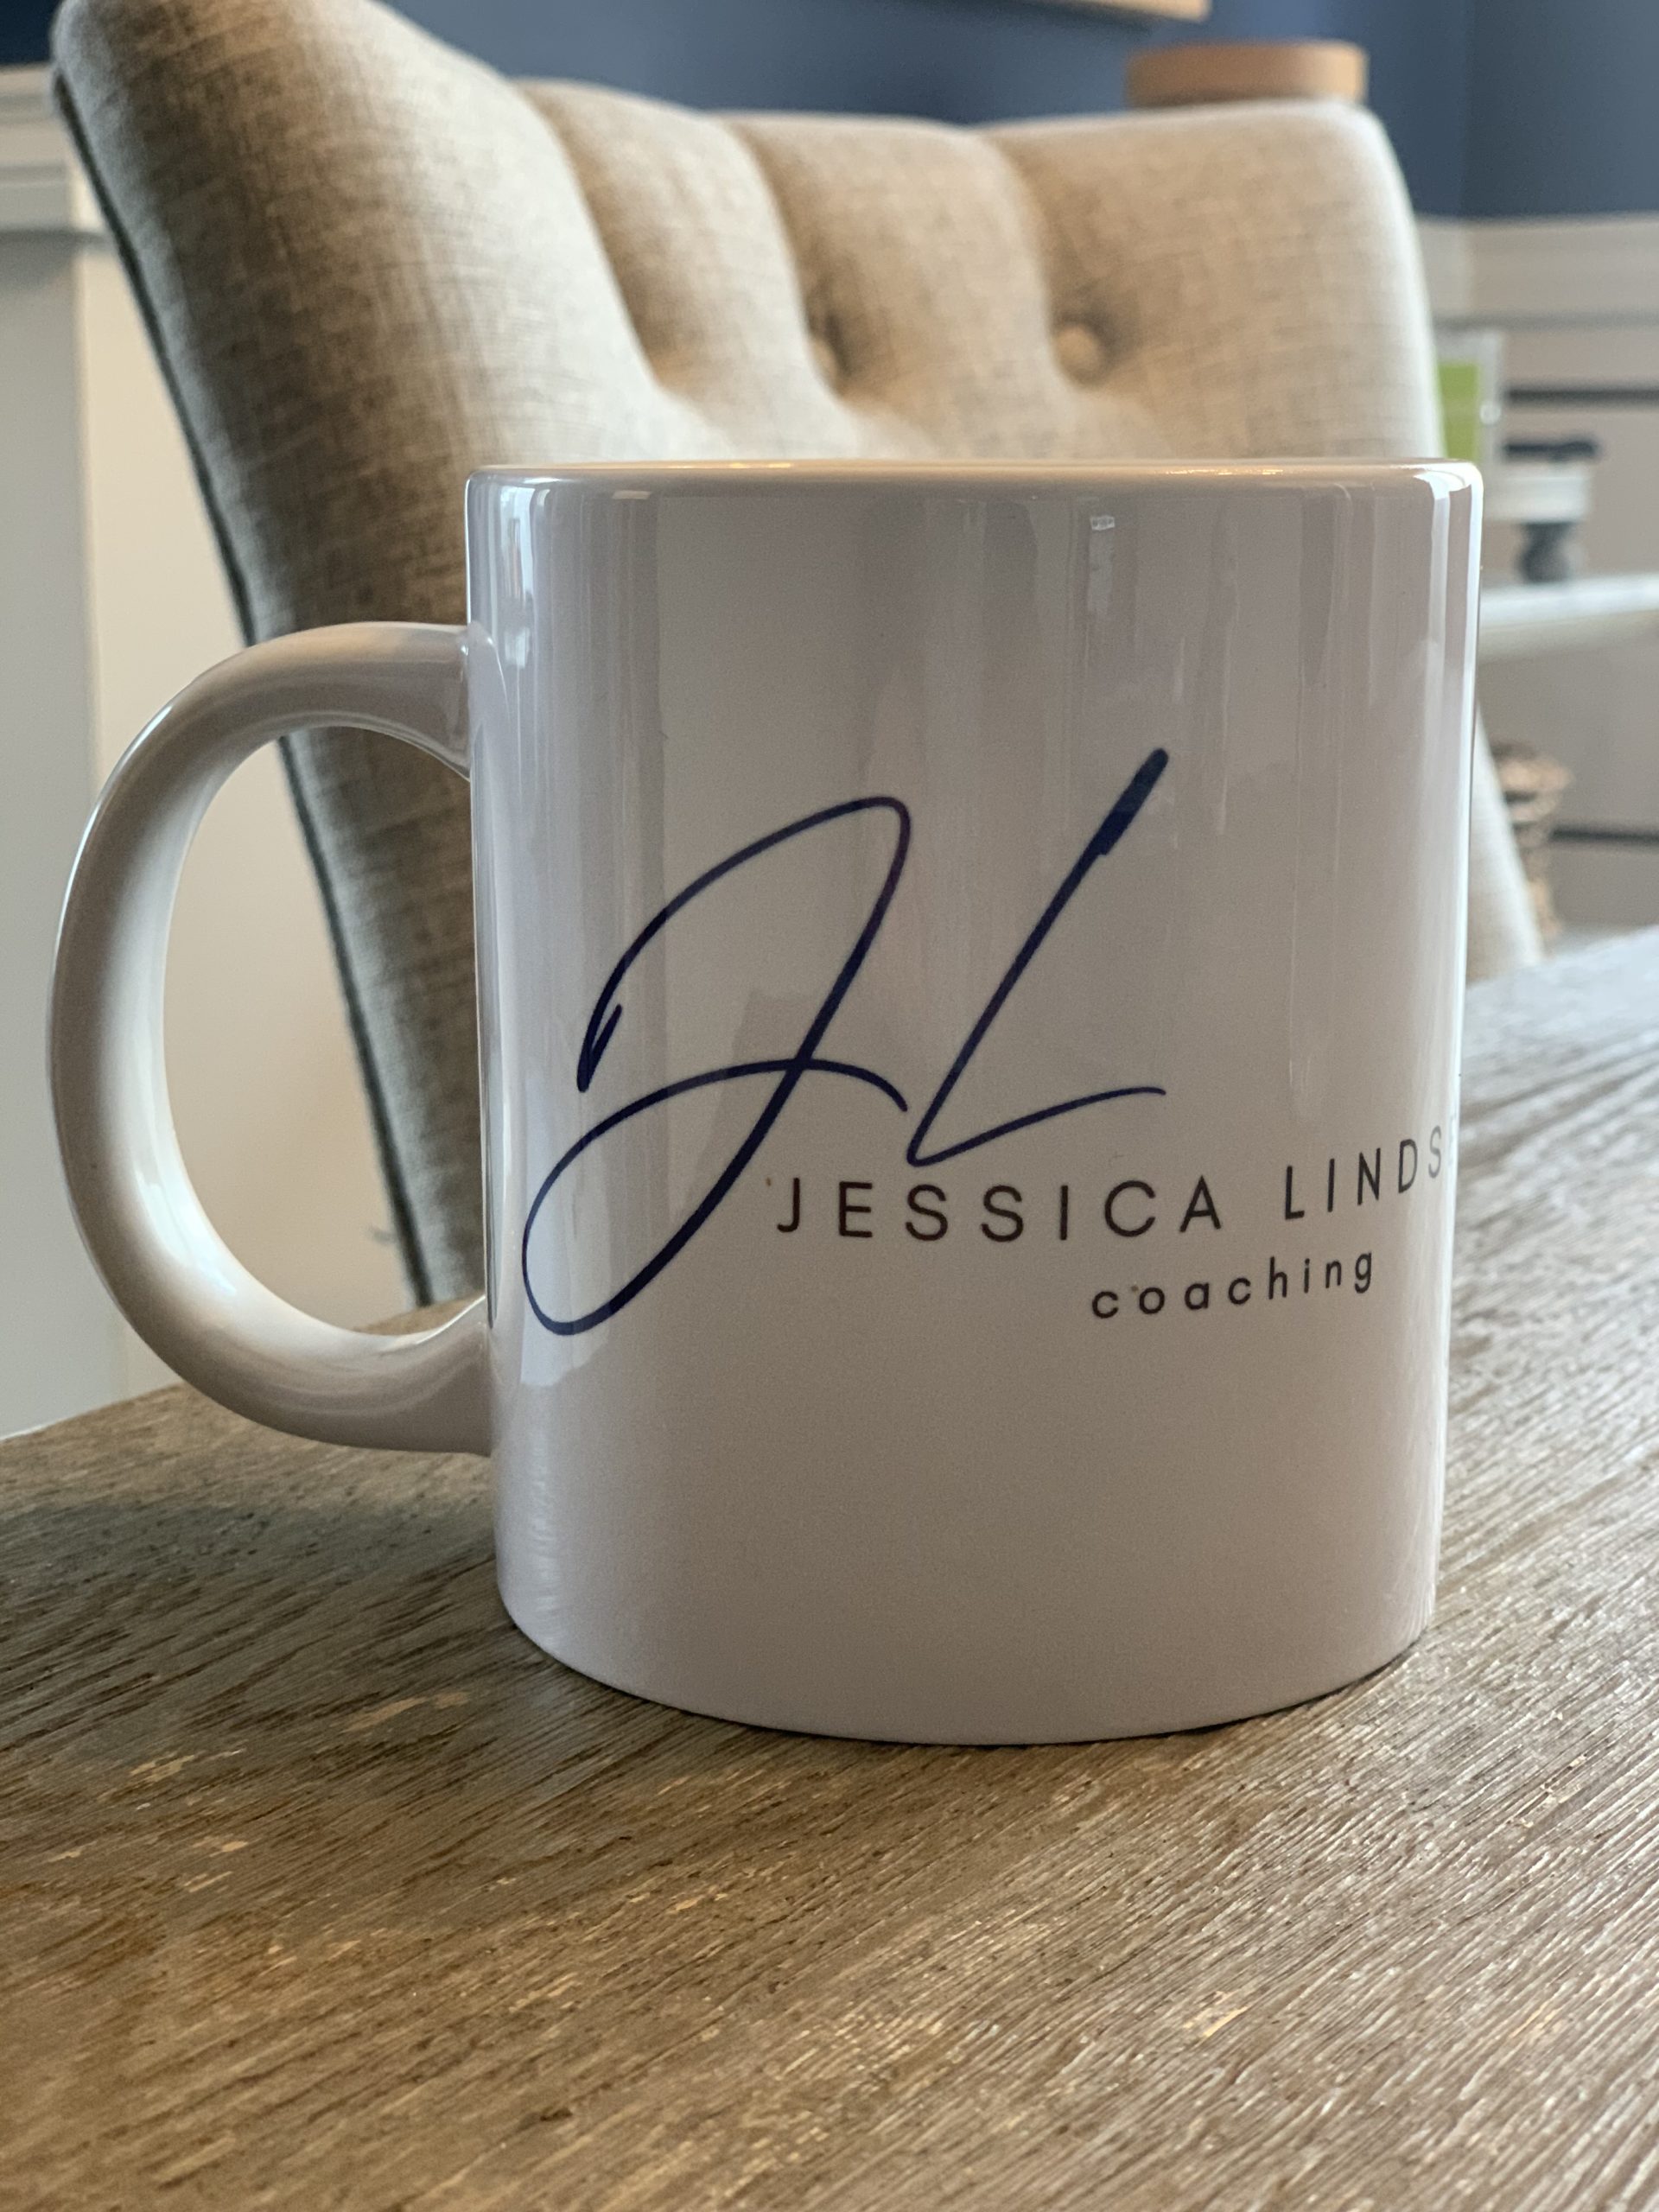 jessica lindsey coaching coffee mug